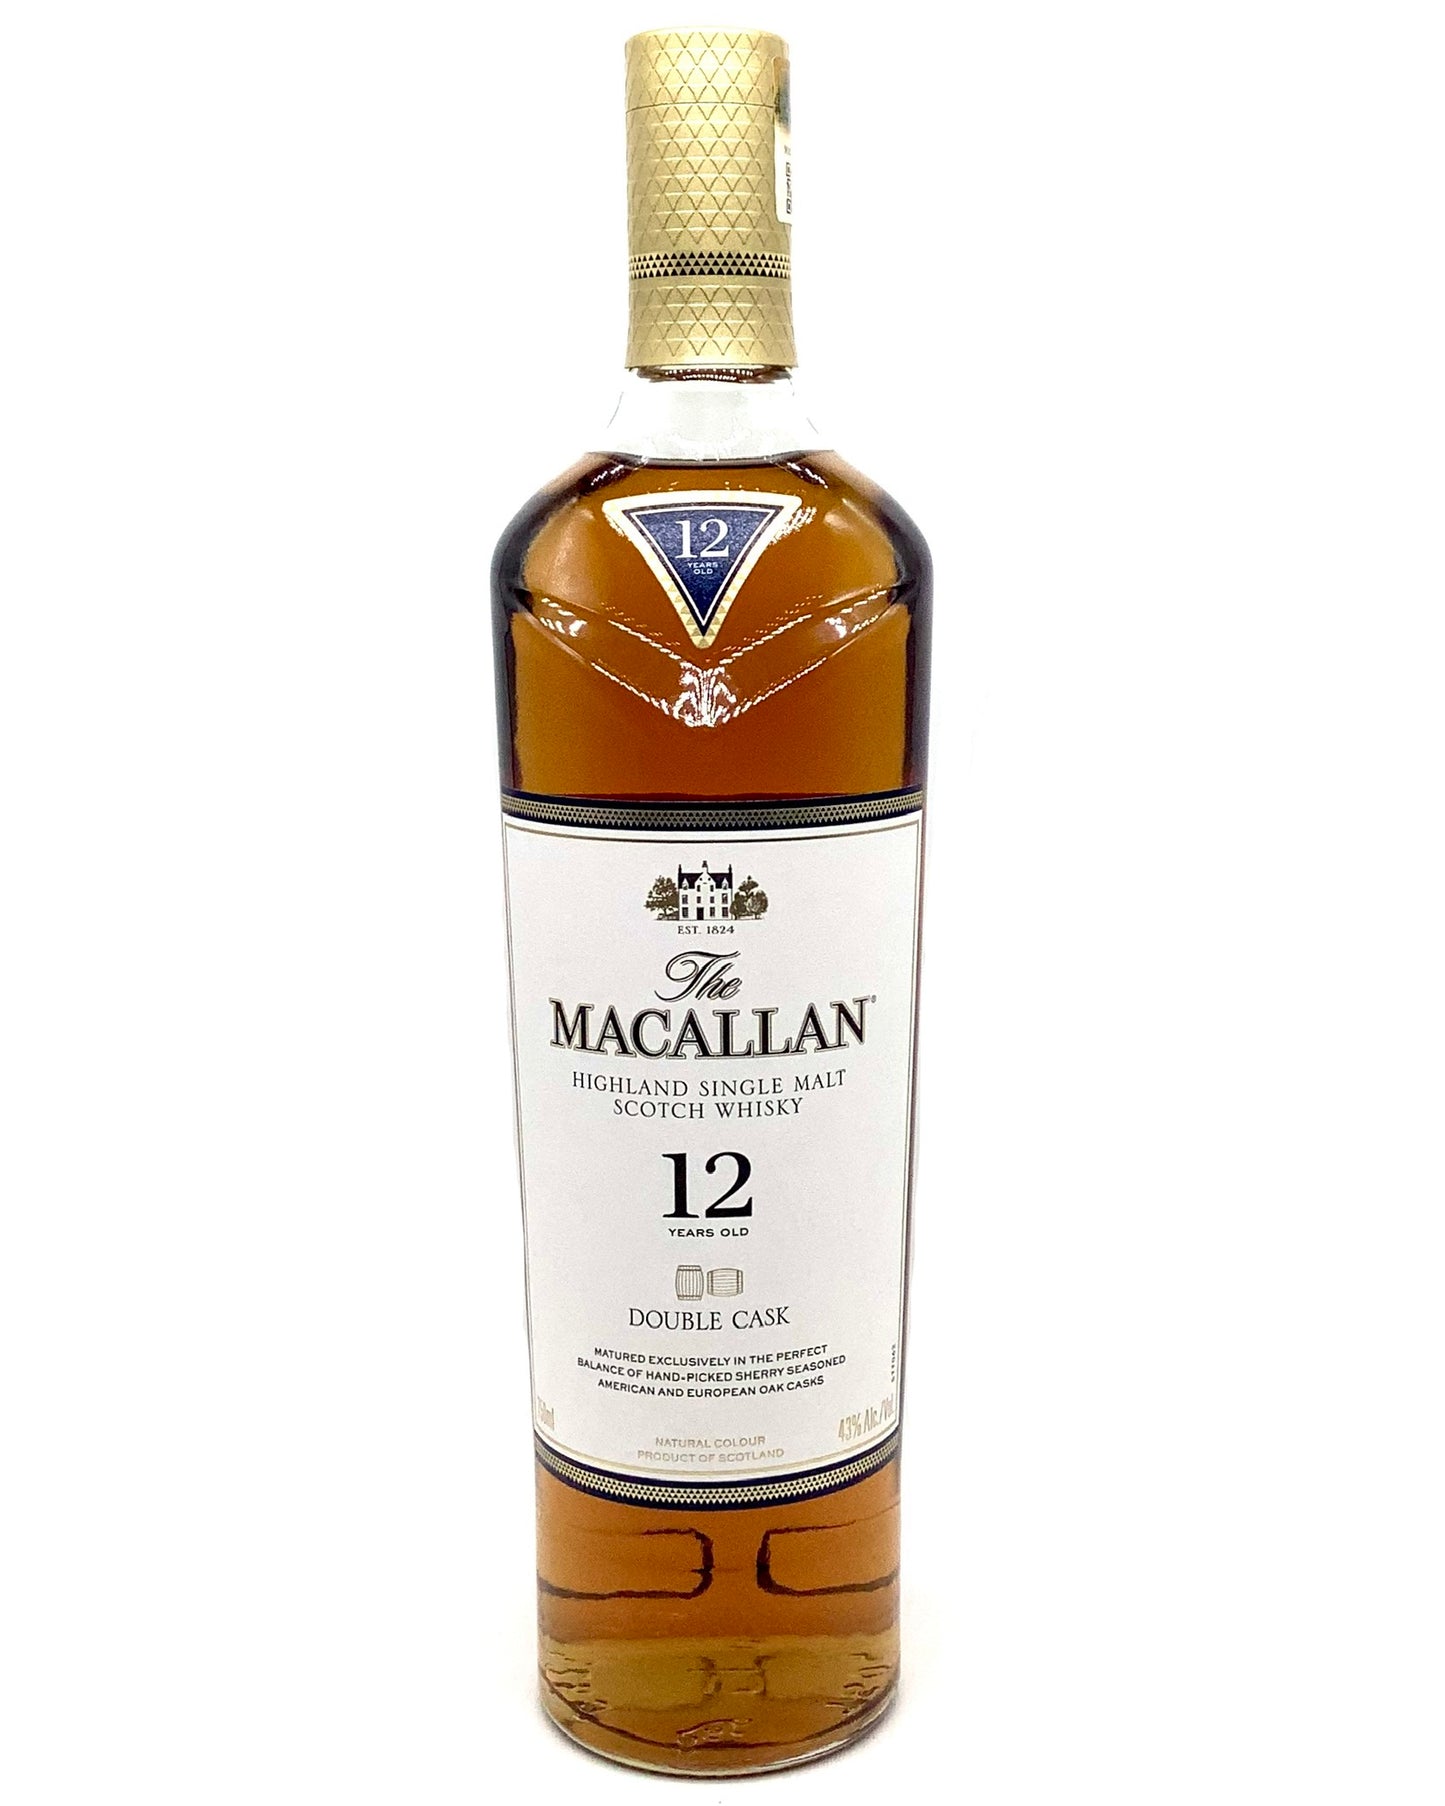 The Macallan 12 Year Double Cask Highland Single Malt Scotch Whisky